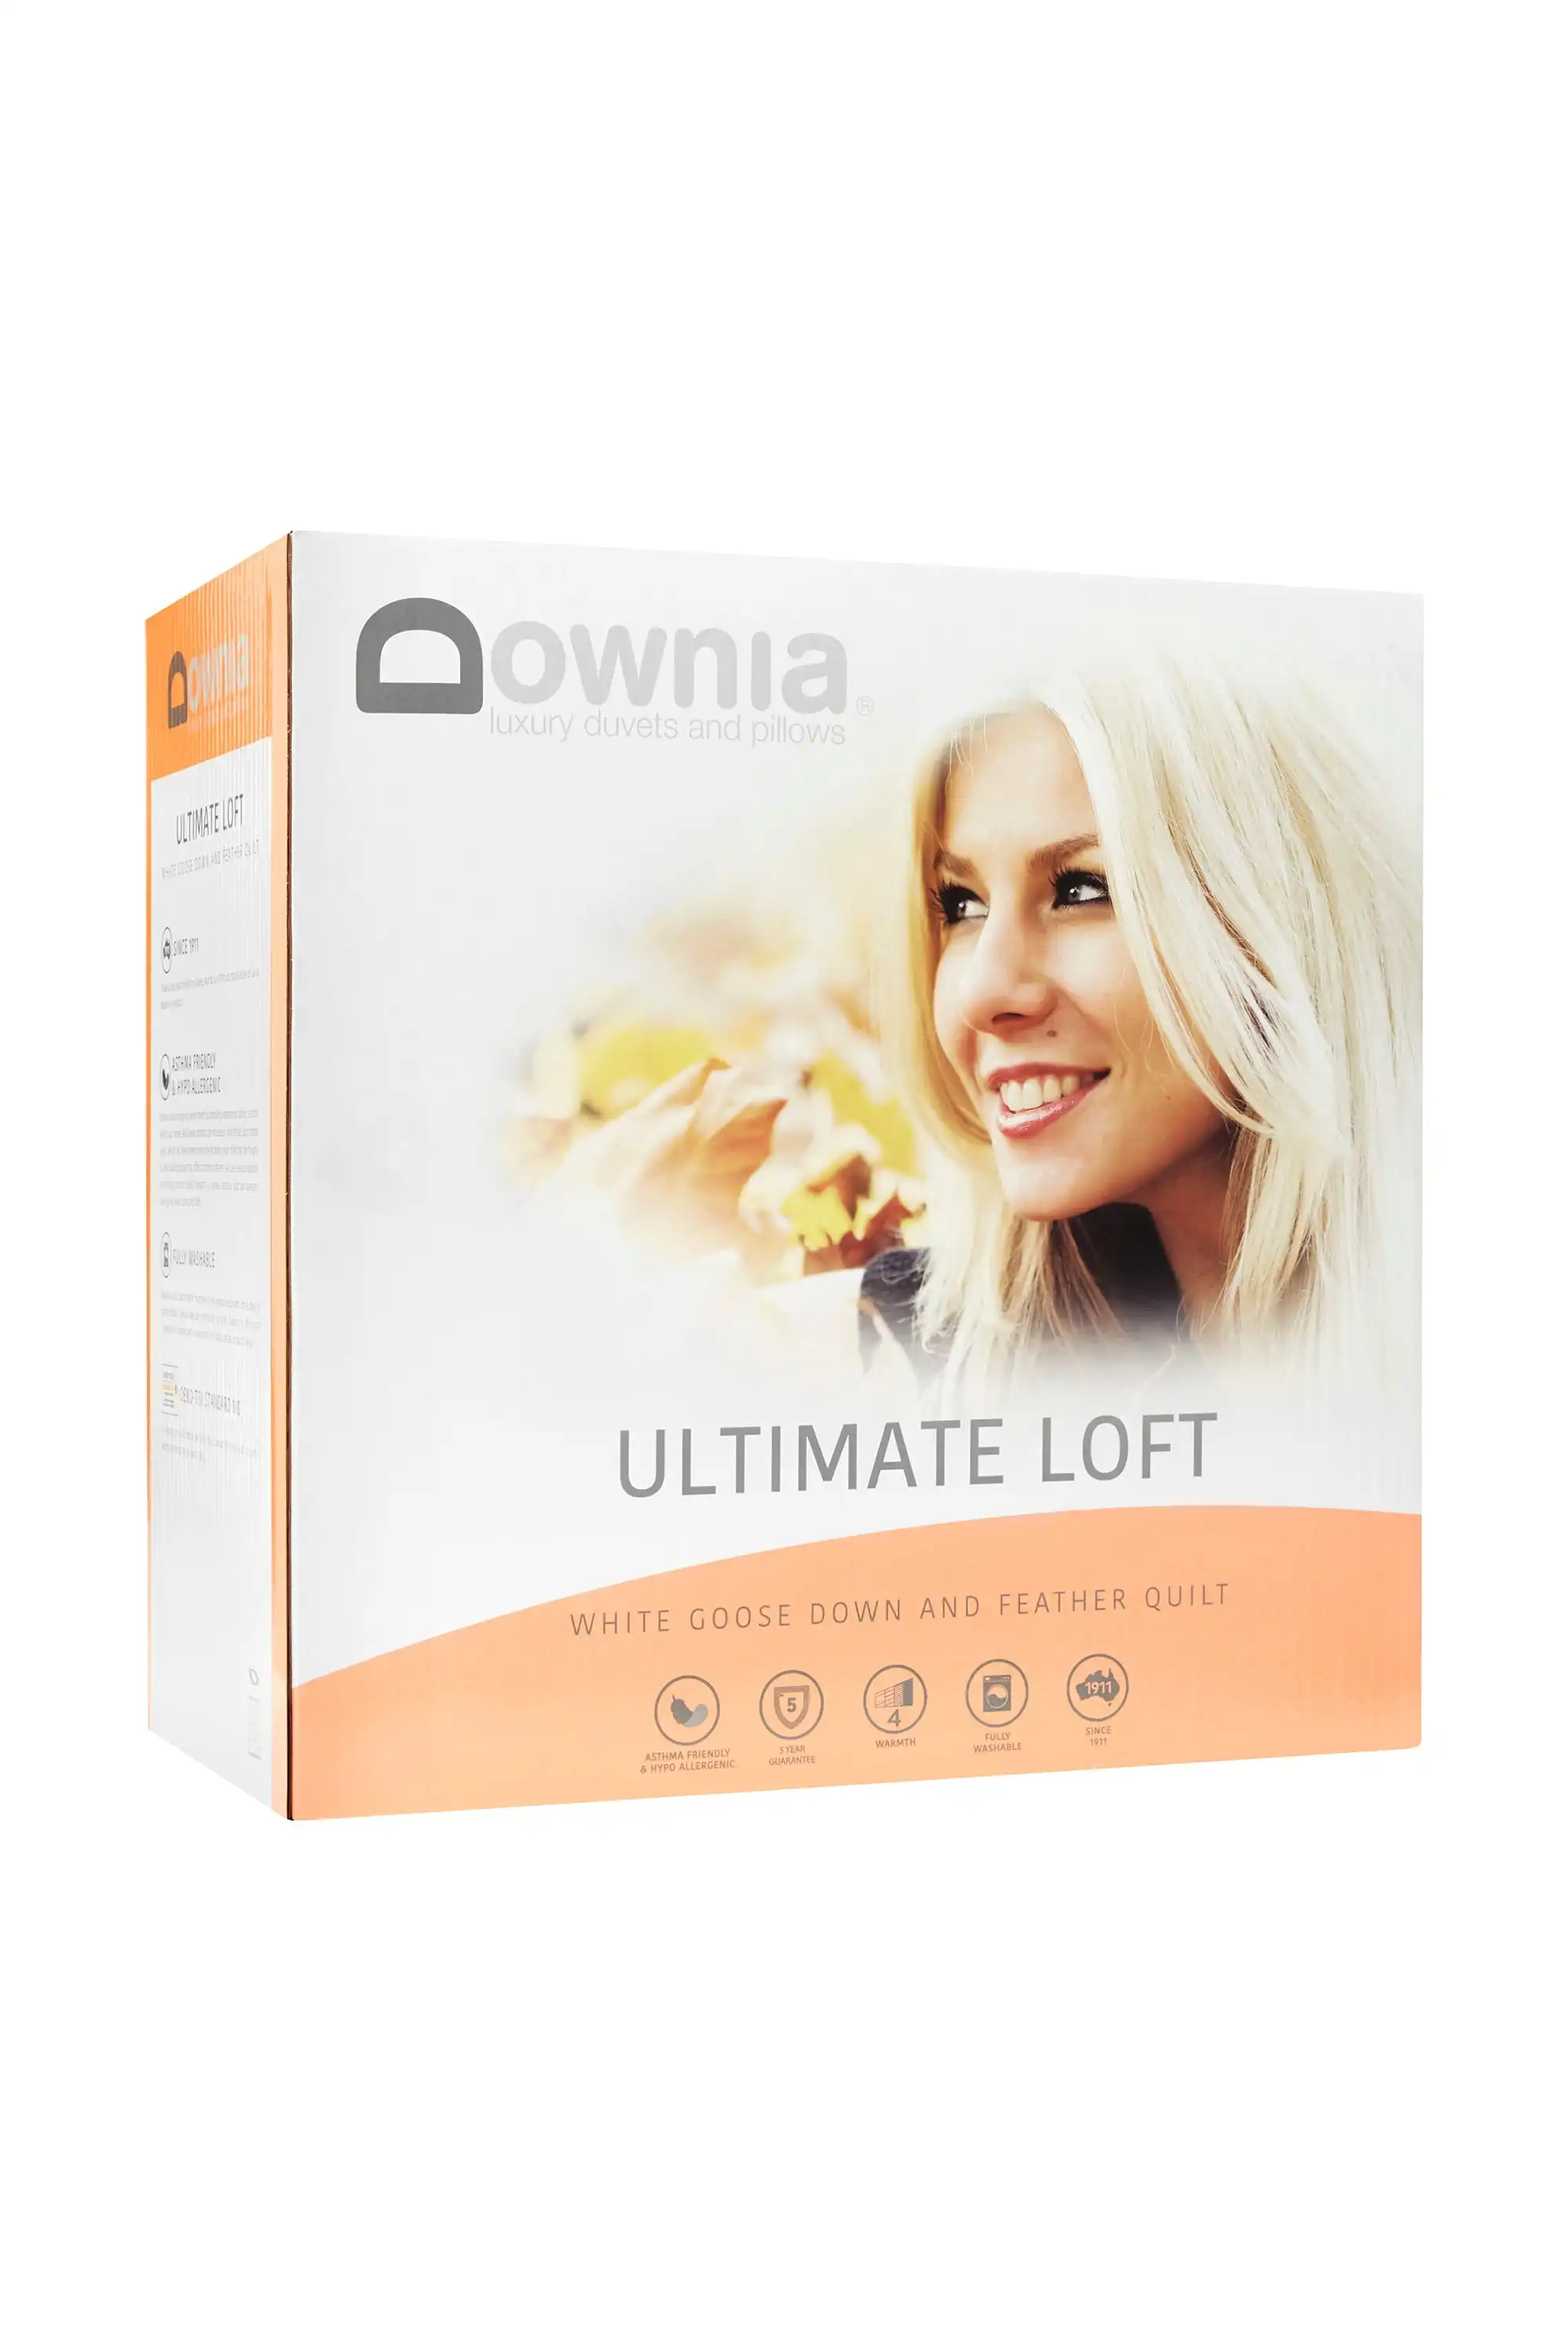 Downia Ultimate Loft 50% WGD Quilt